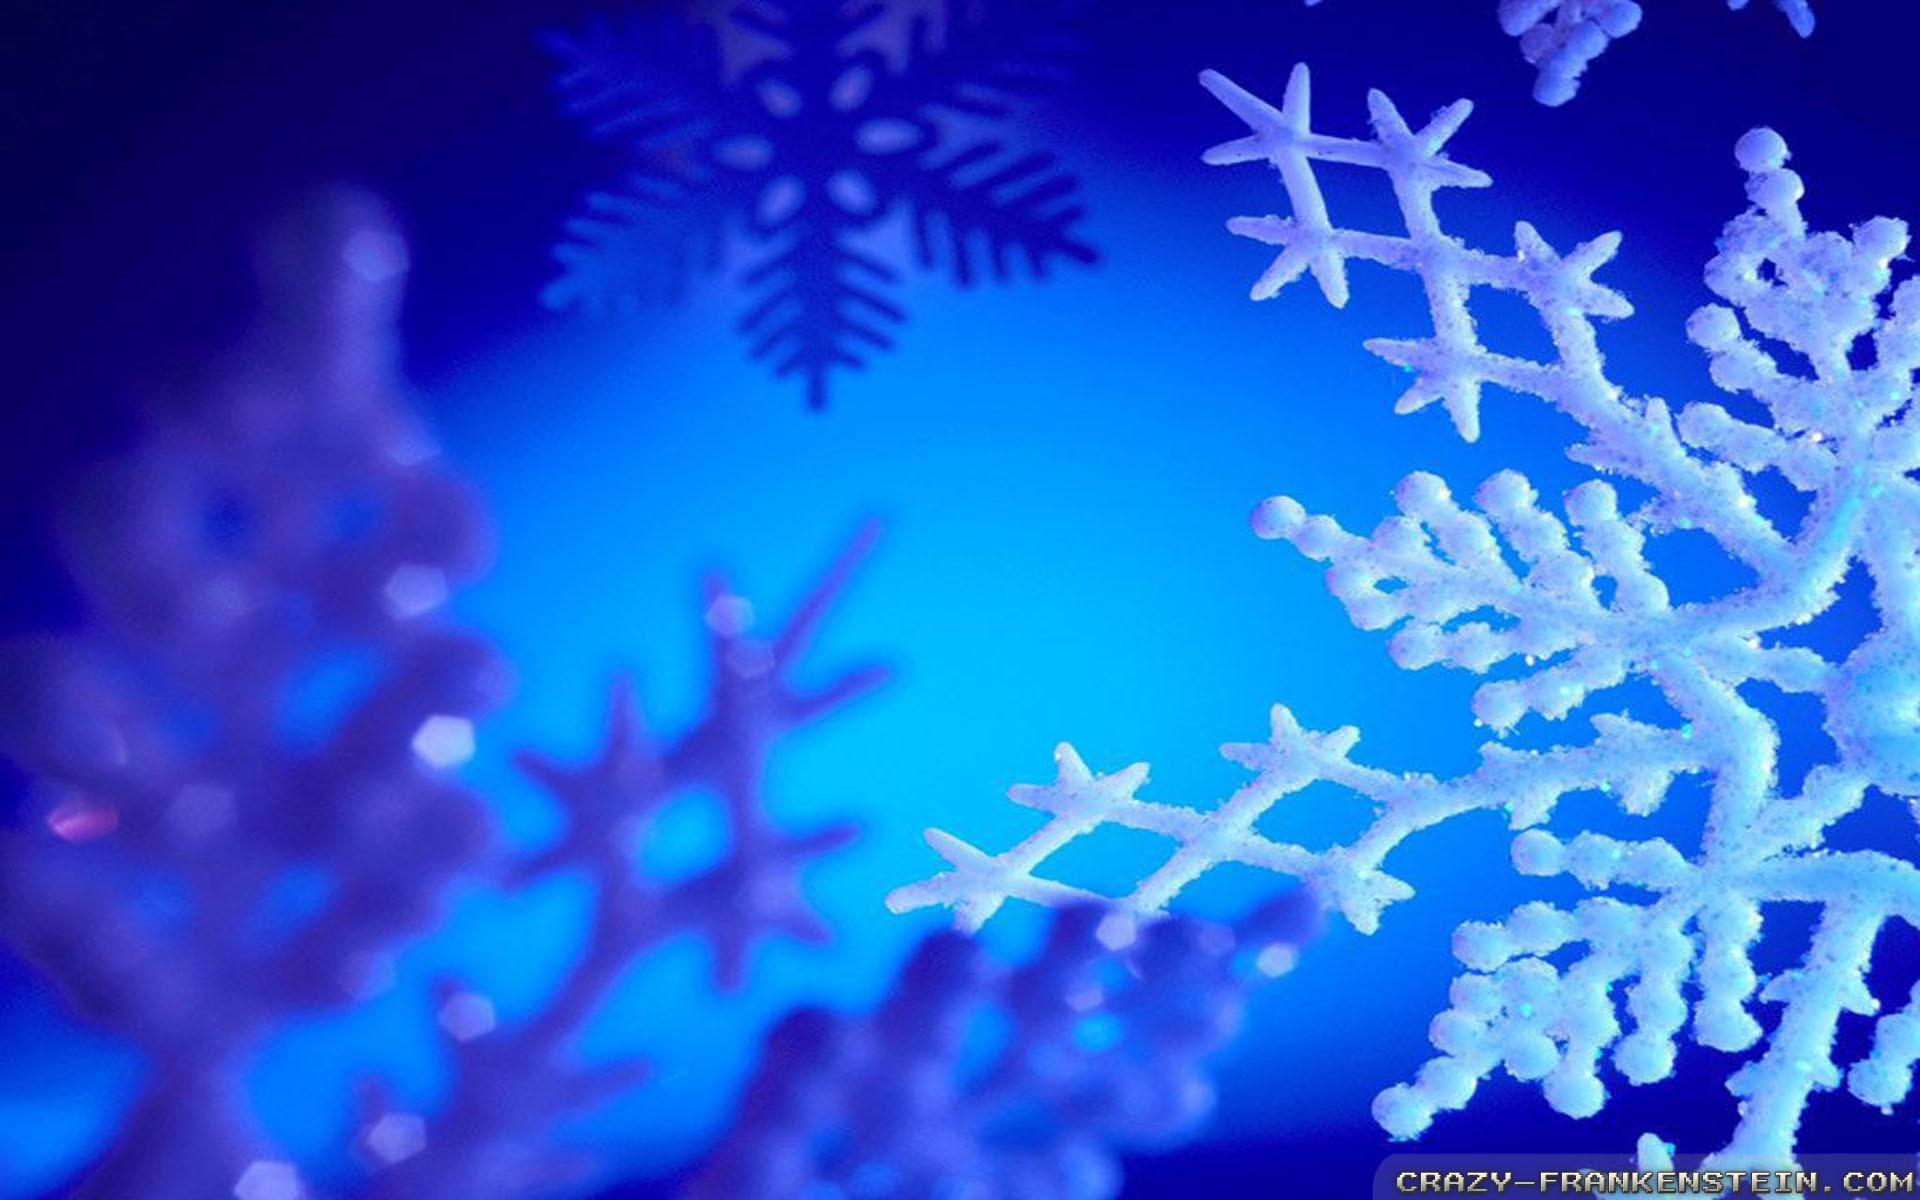 1920x1200 Wallpaper: Blue Winter Snowflake Resolution: 1024x768 | 1280x1024 |  1600x1200. Widescreen Res: 1440x900 | 1680x1050 | 